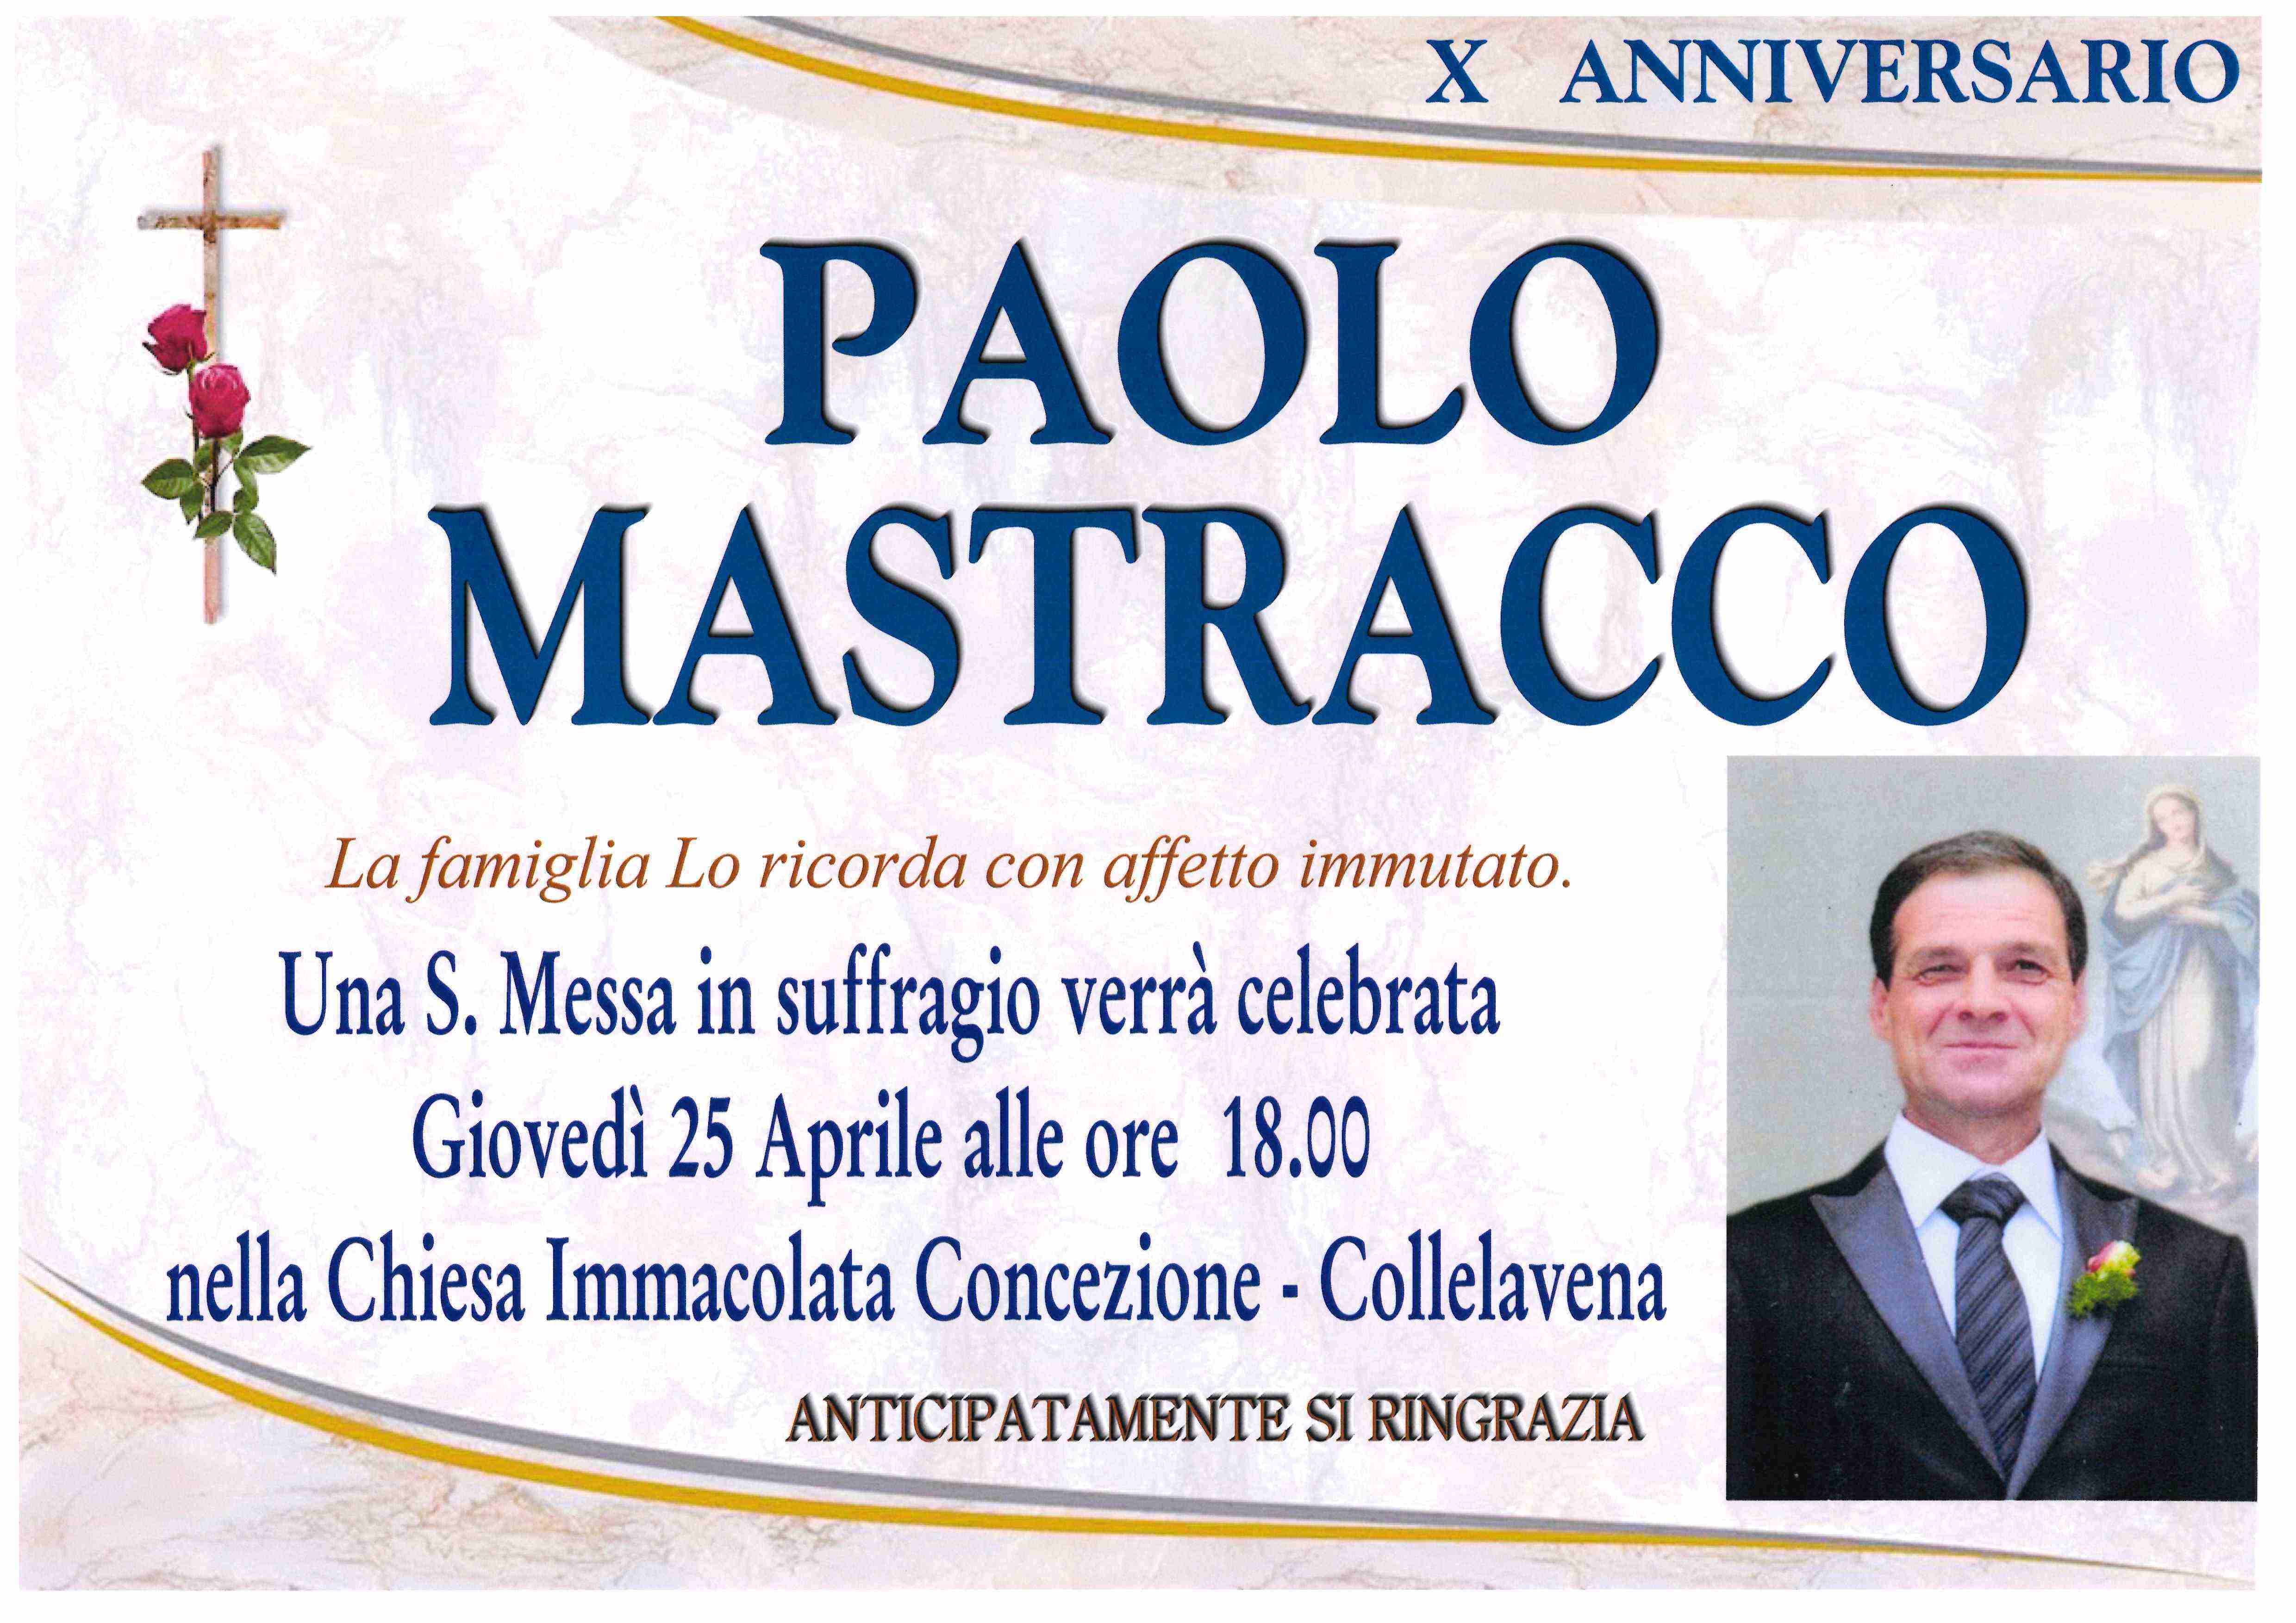 Paolo Mastracco